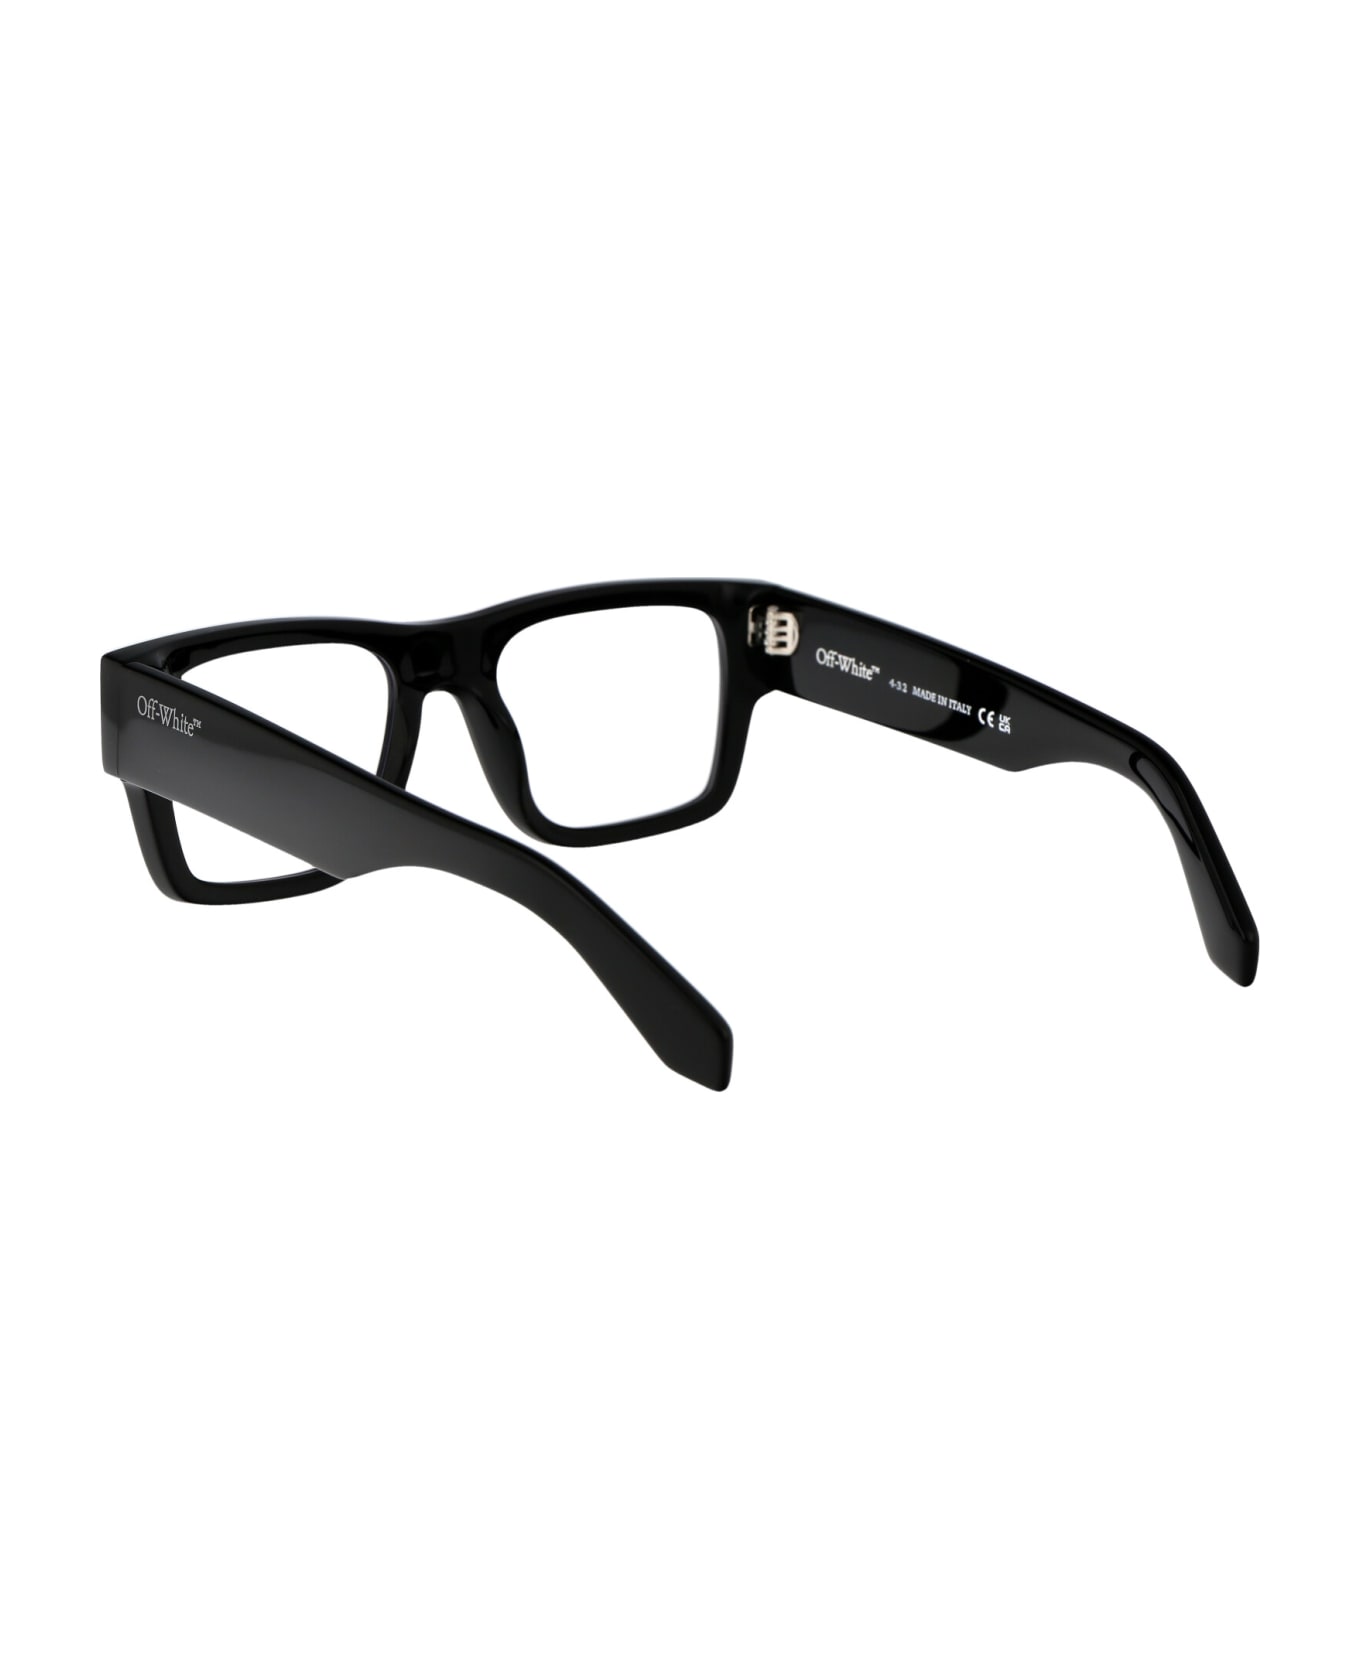 Off-White Optical Style 40 Glasses - 1000 BLACK